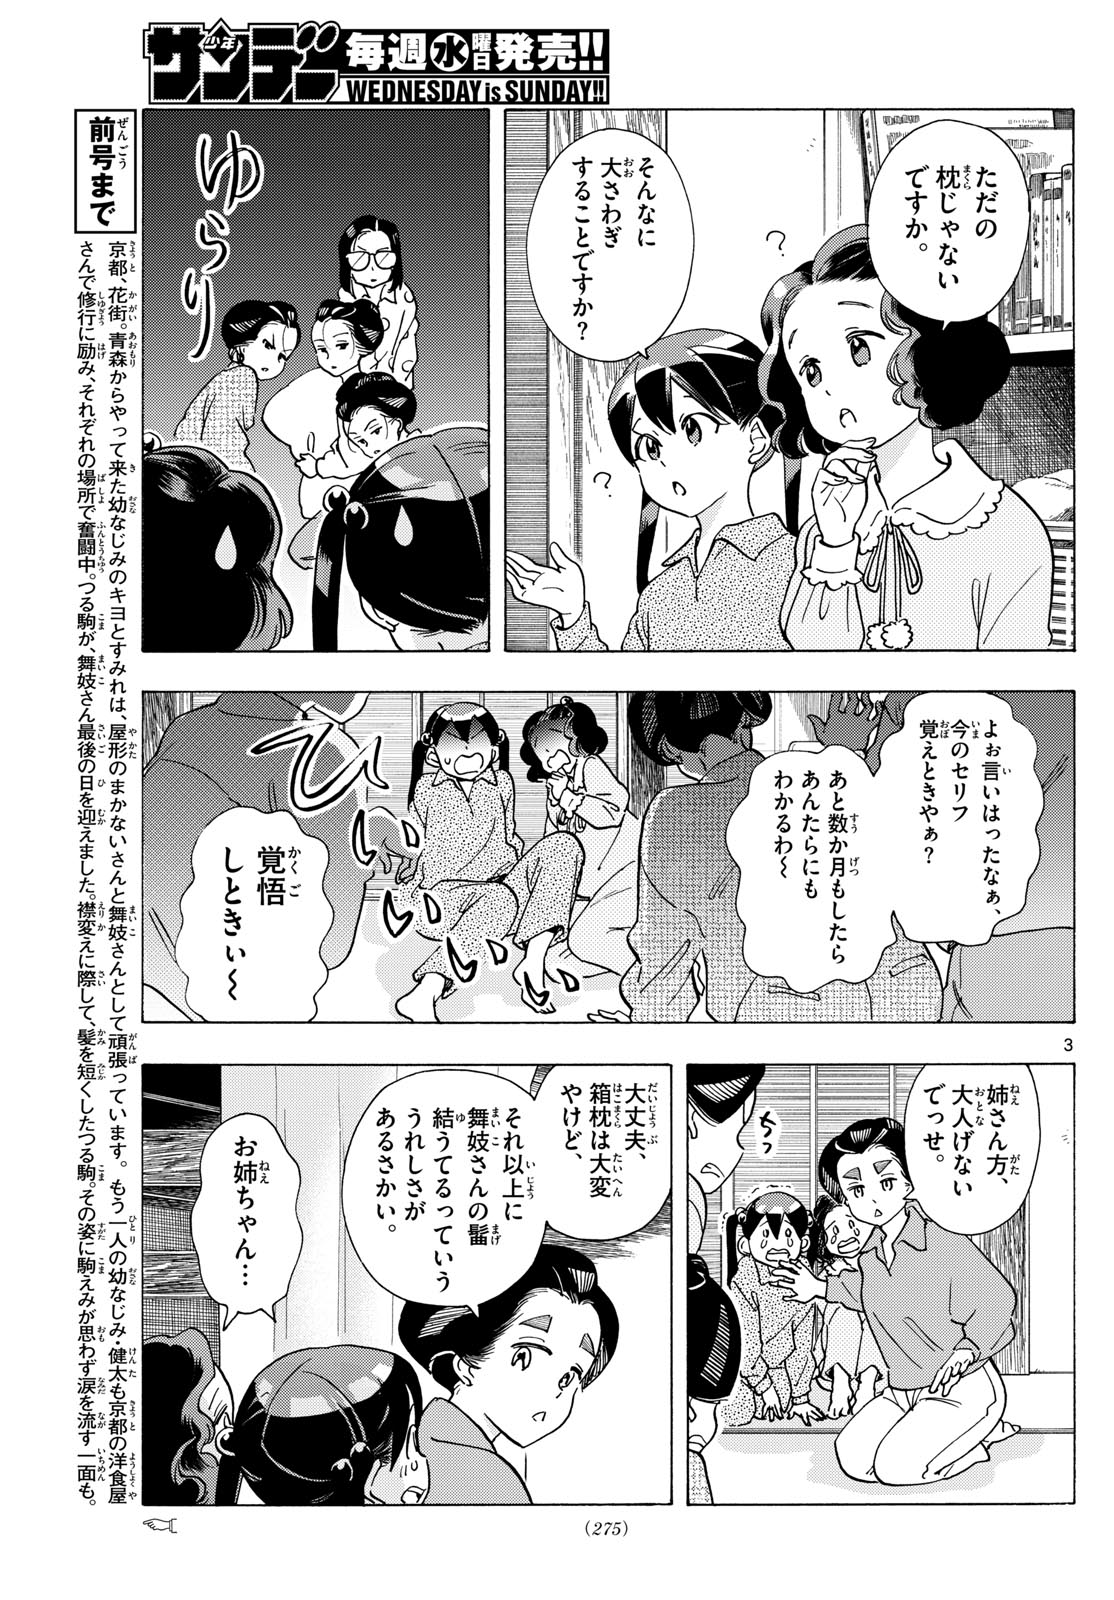 Maiko-san Chi no Makanai-san - Chapter 294 - Page 3